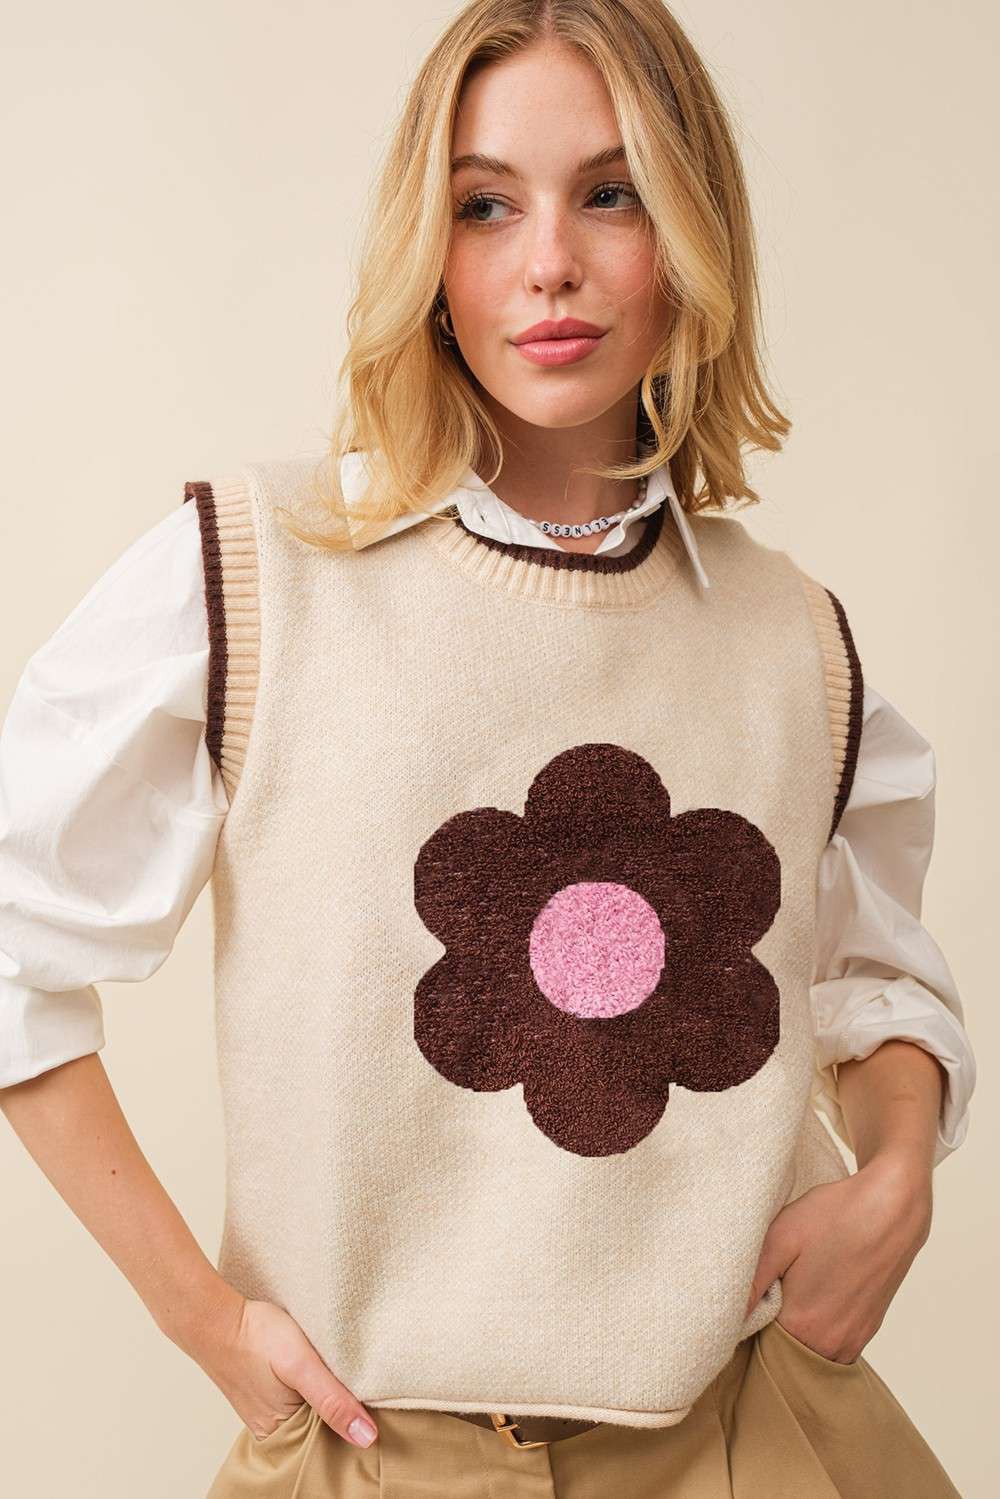 Flower print sweater Vest top